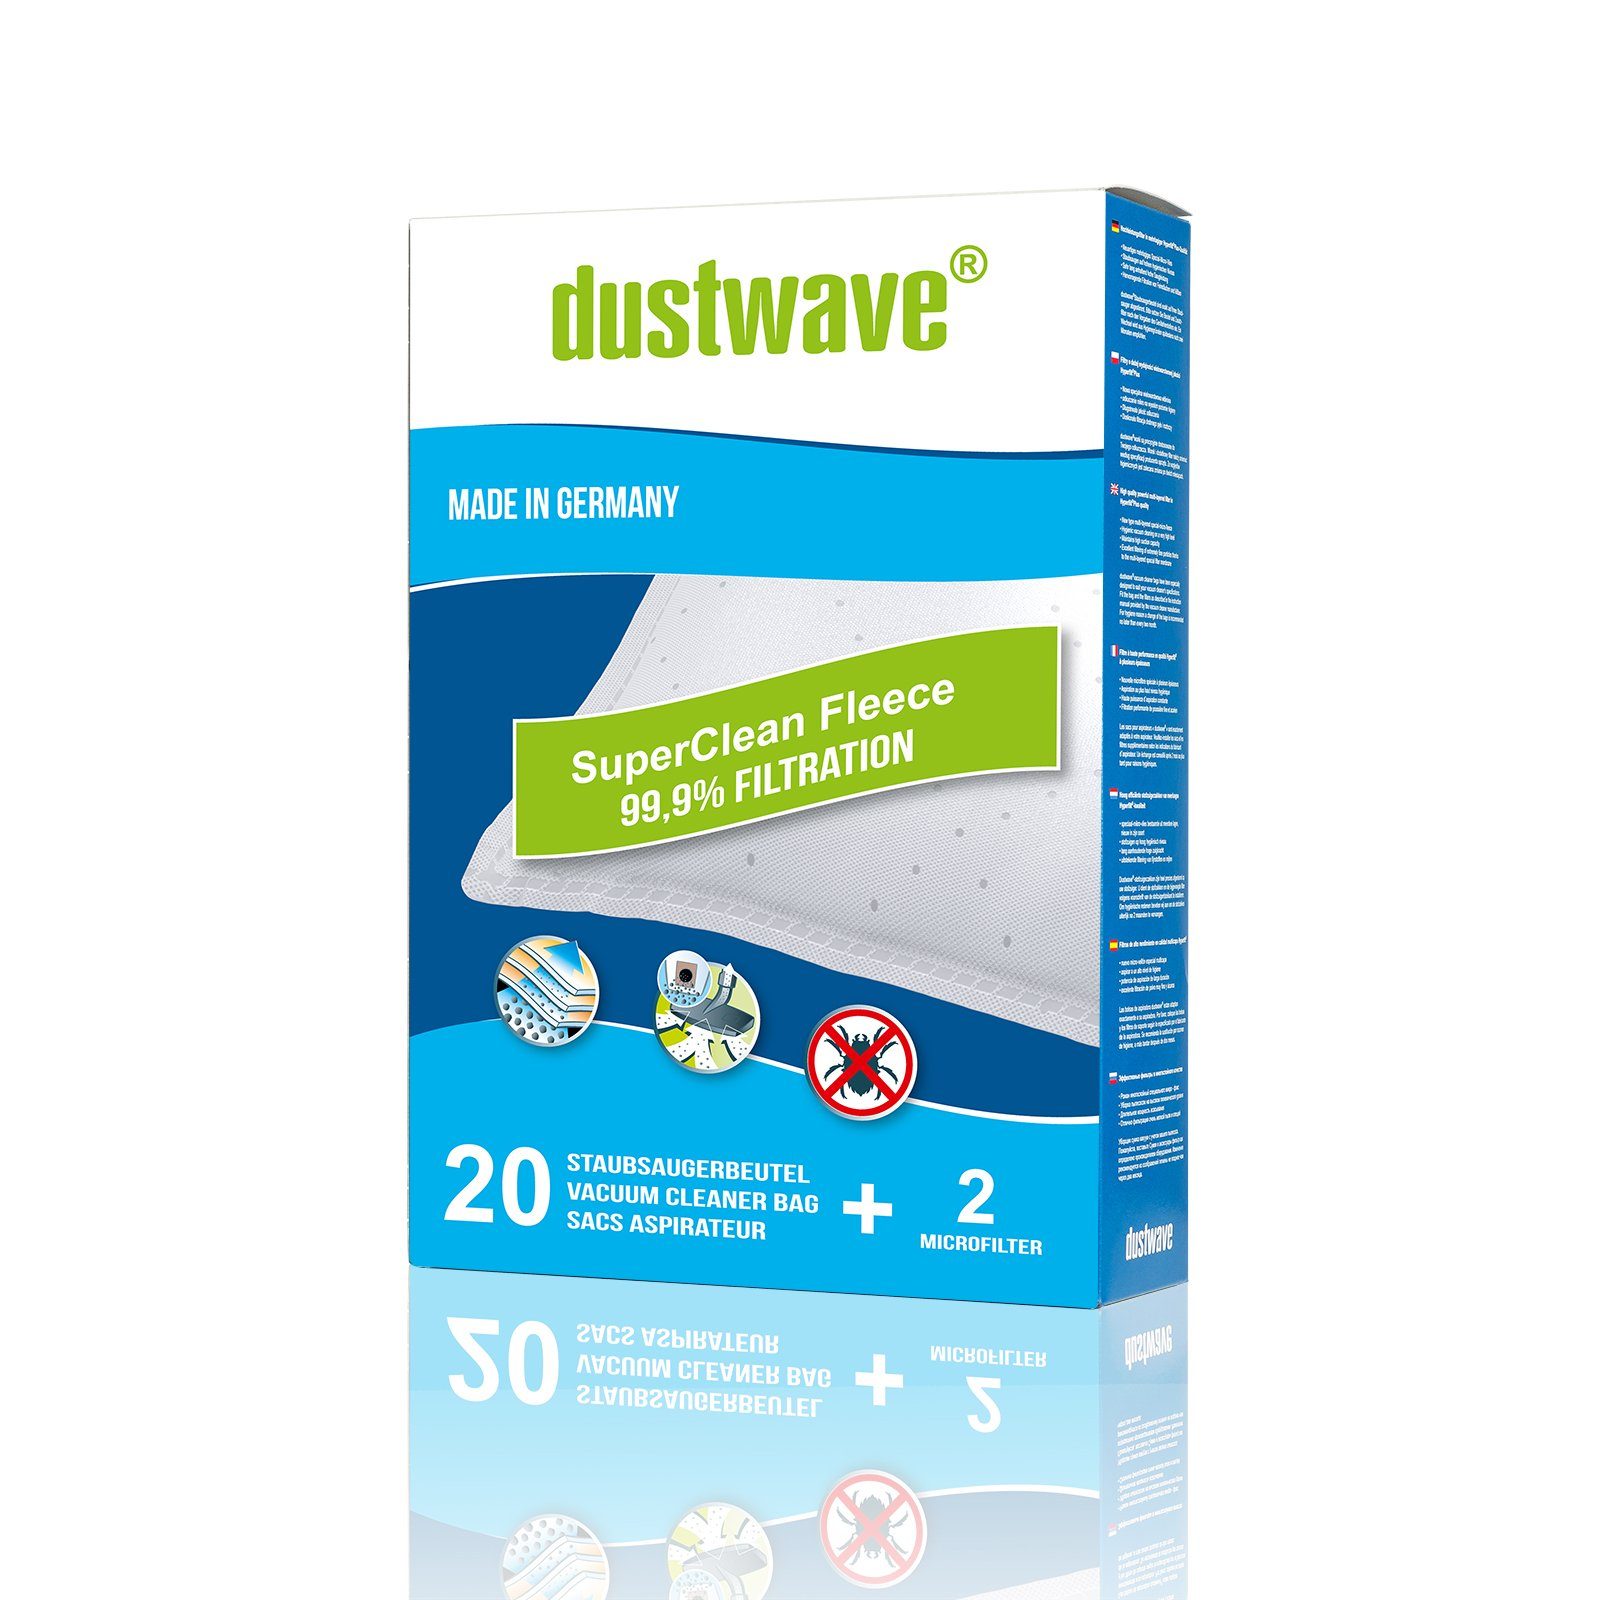 Dustwave Staubsaugerbeutel Megapack, passend für Bliss BS 1600 / BS1600, 20 St., Megapack, 20 Staubsaugerbeutel + 2 Hepa-Filter (ca. 15x15cm - zuschneidbar)